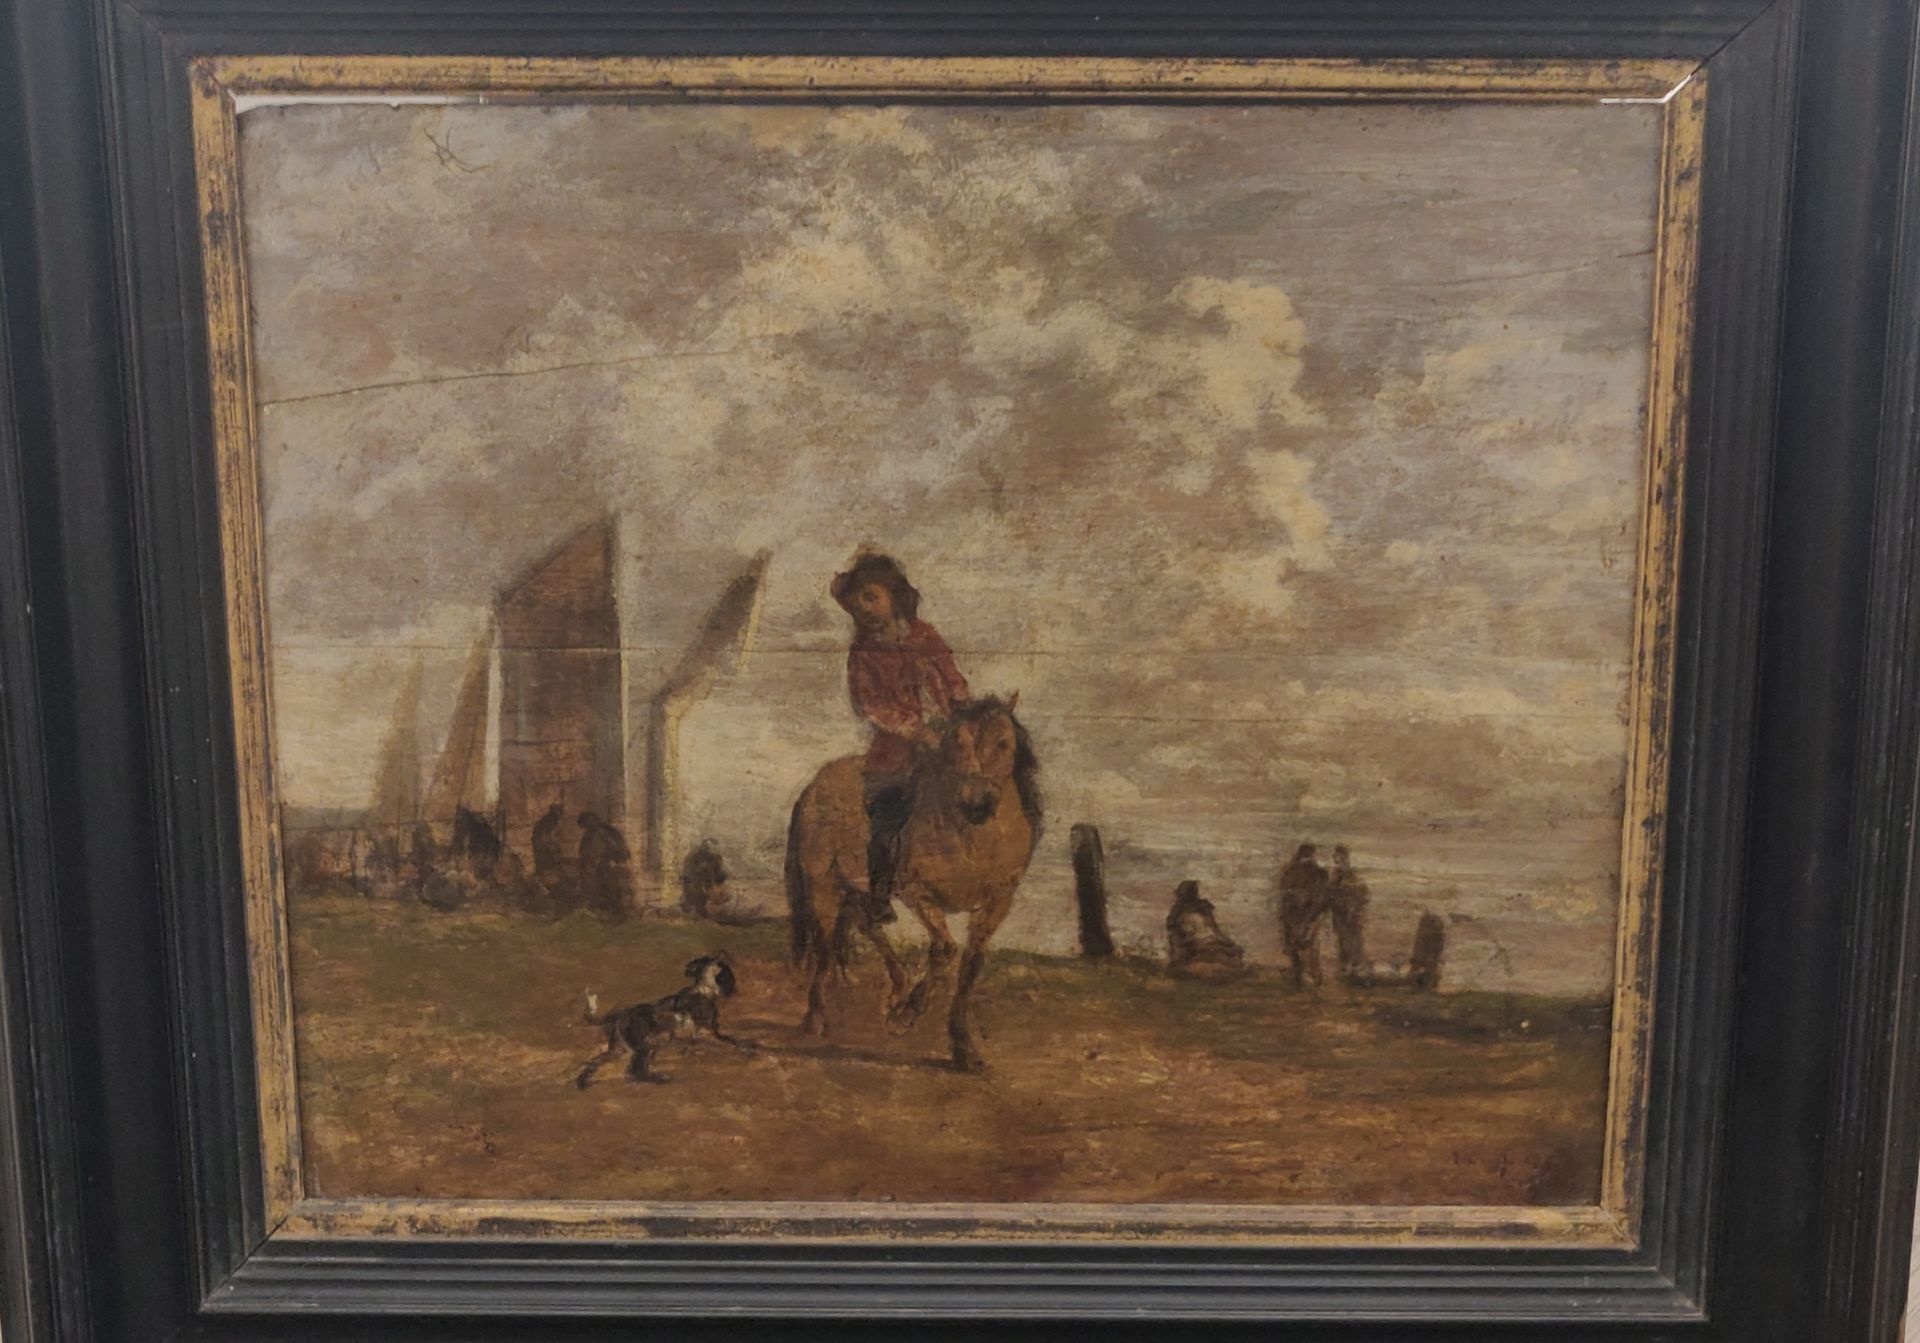 Null 17世纪霍兰德学校，CUYP的追随者

骑士和他的狗

小组

在右下角有一个签名

37 x 46 厘米